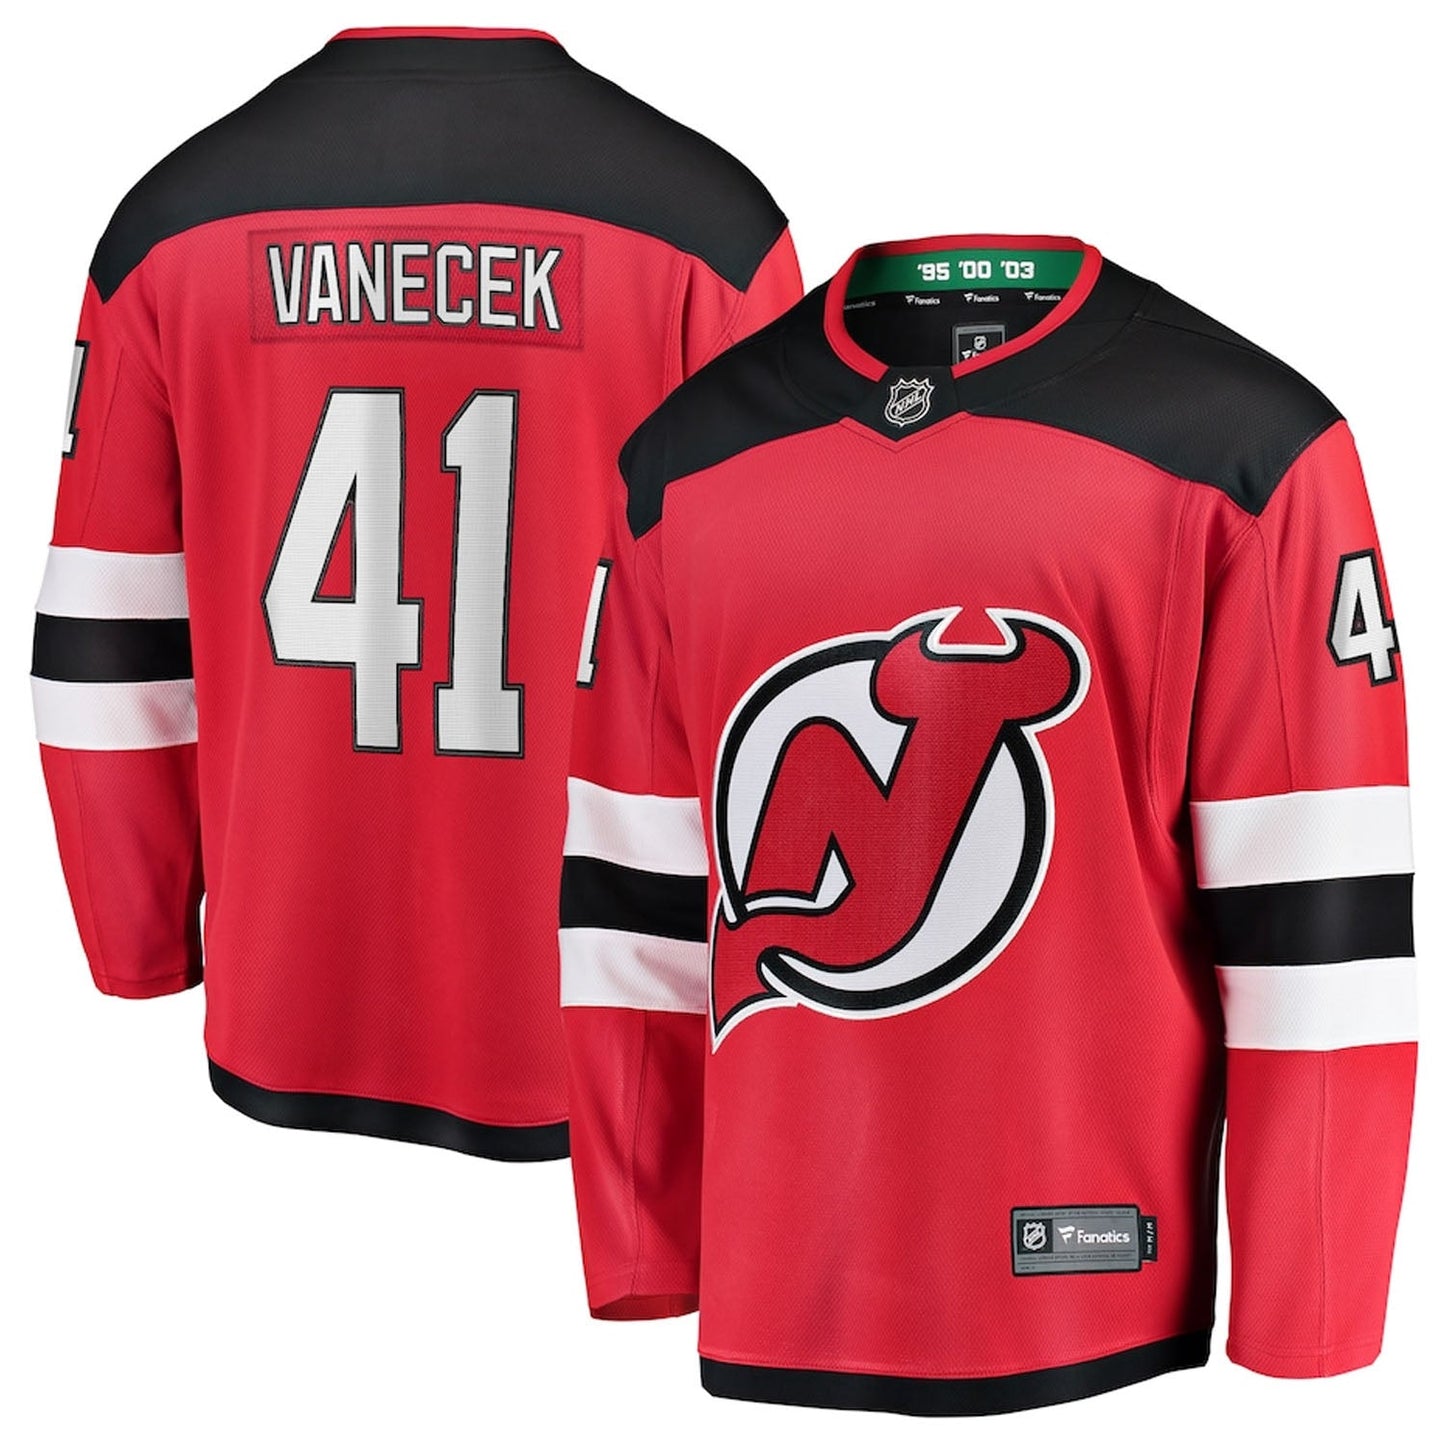 NHL Vitek Vaneek New Jersey Devils 41 Jersey